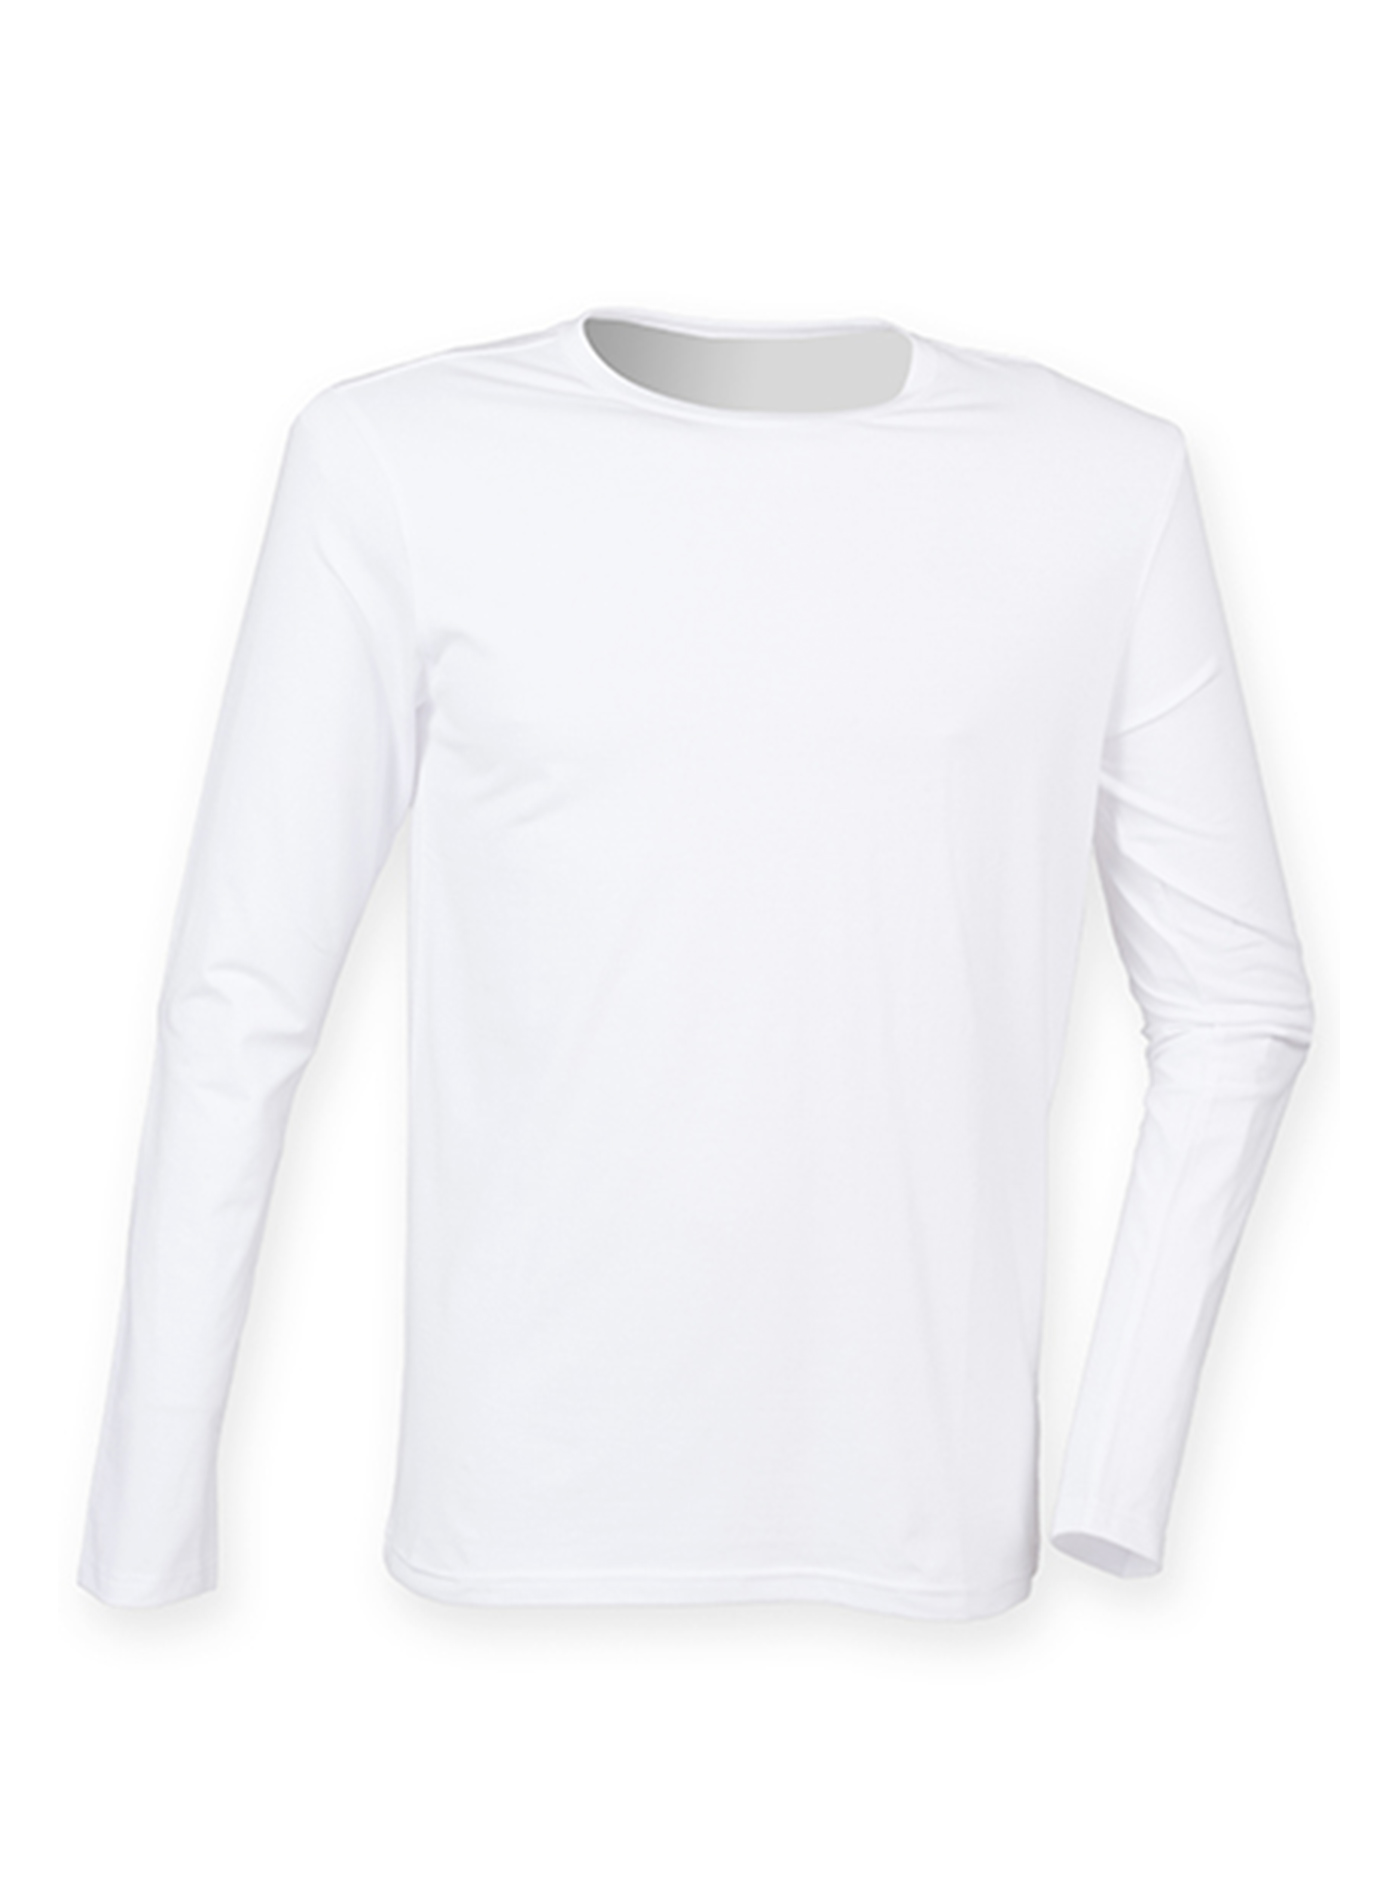 Pánské tričko s dlouhým rukávem Skinnifit Feels Good - Bílá M